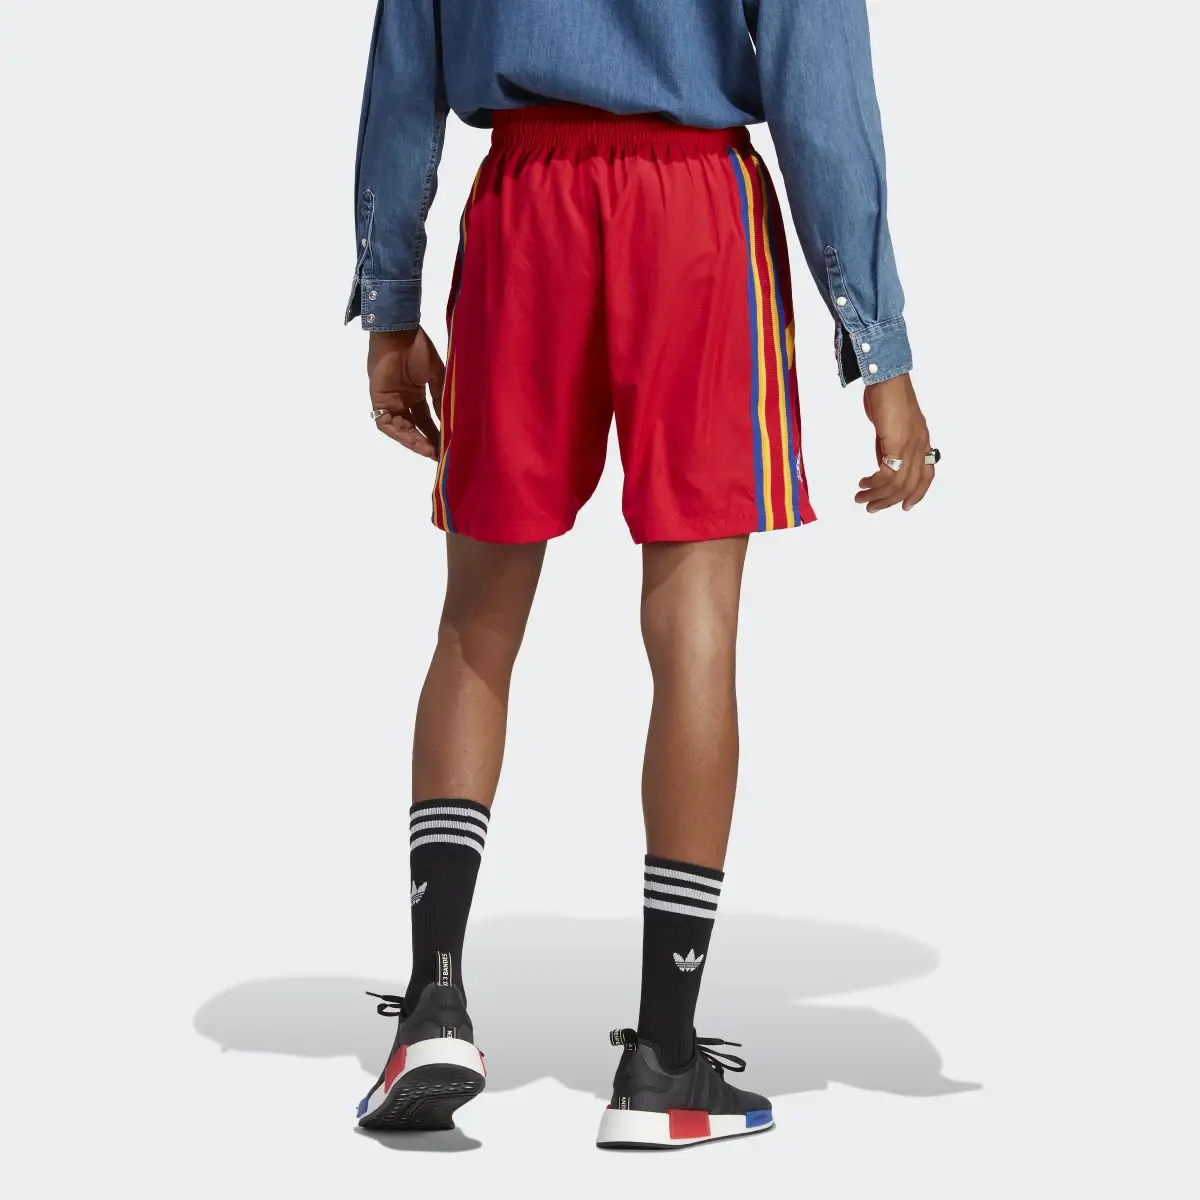 Adidas Eric Emanuel McDonald's Shorts. 2